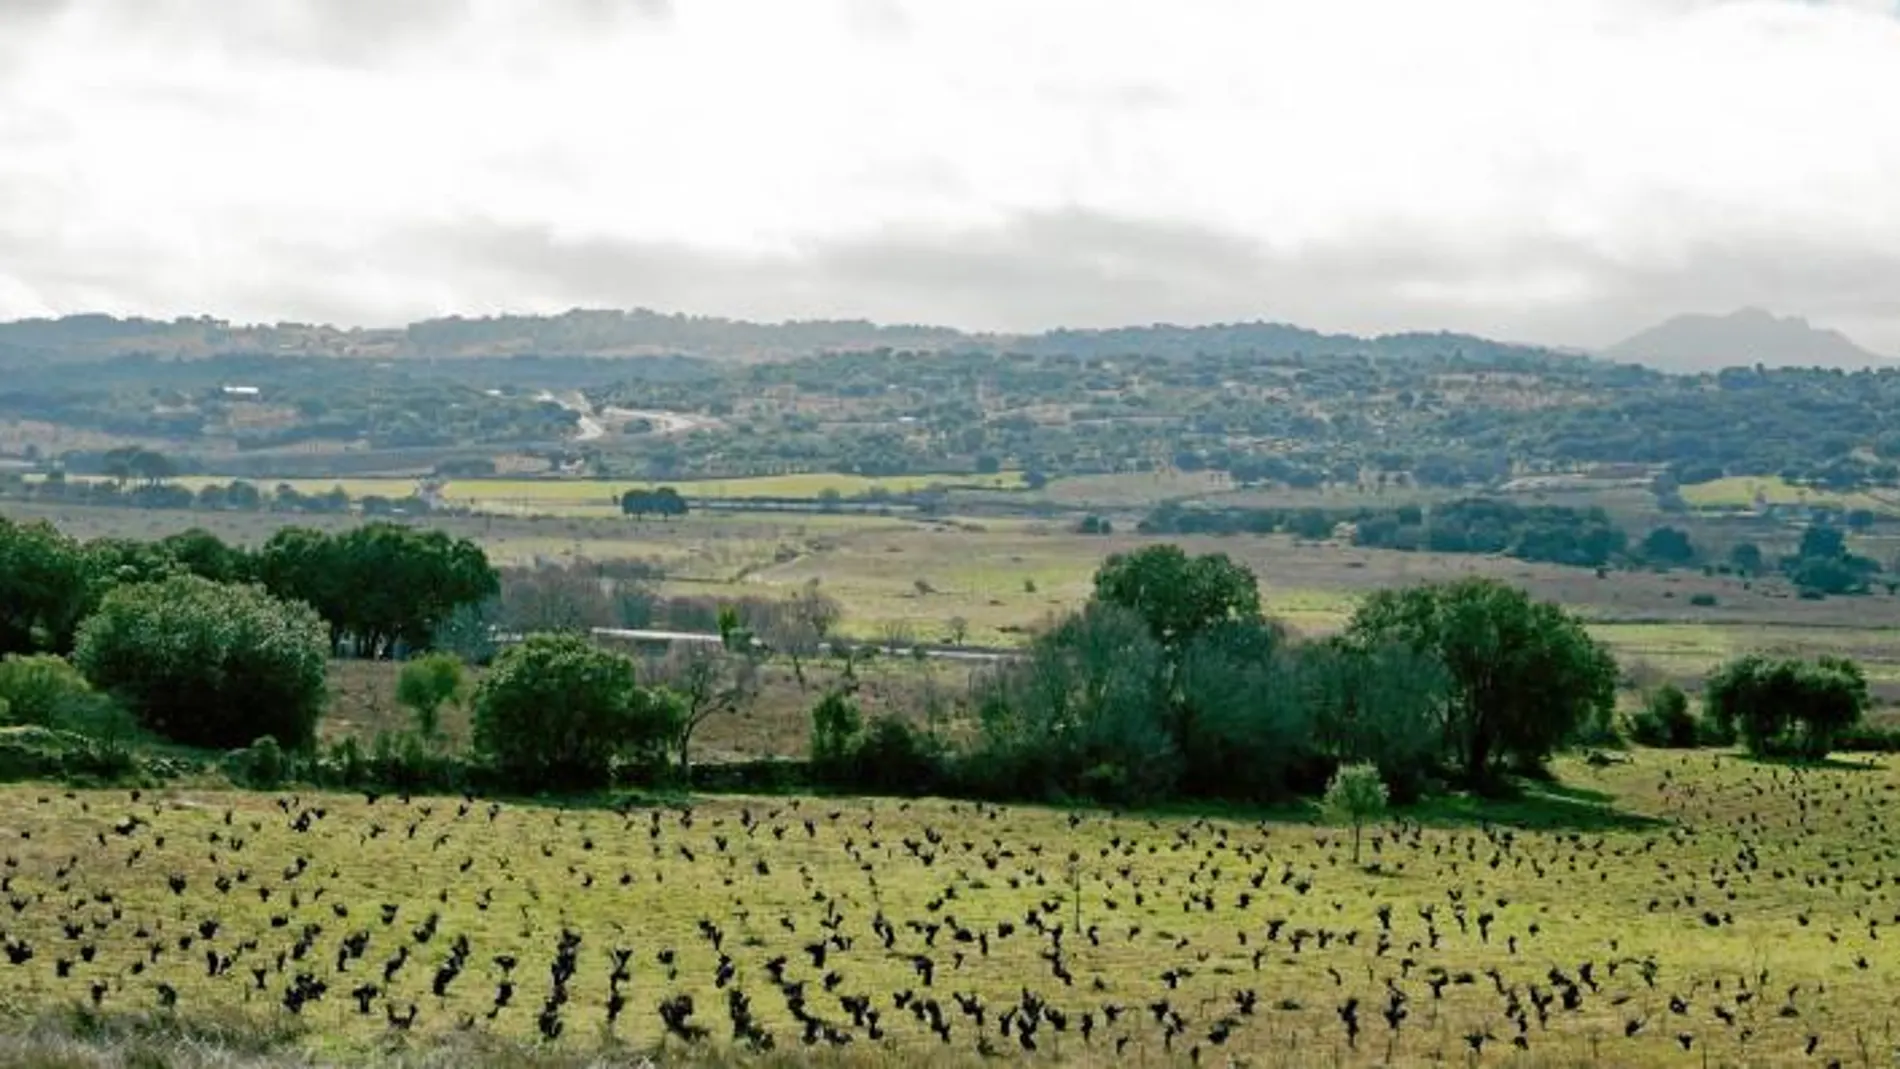 Los viñedos de la bodega madrileña Bernabeleva, en San Martín de Valdeiglesias